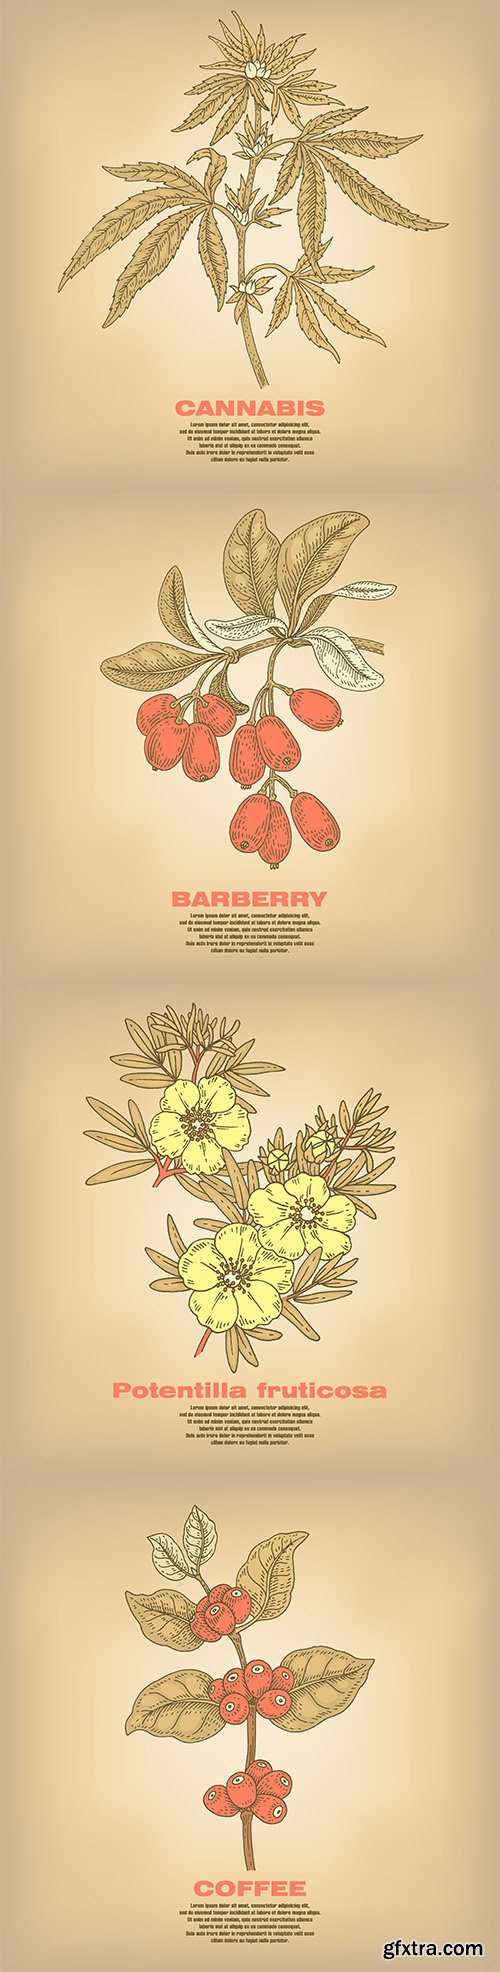 Illustrations of Medical Vector Herbs